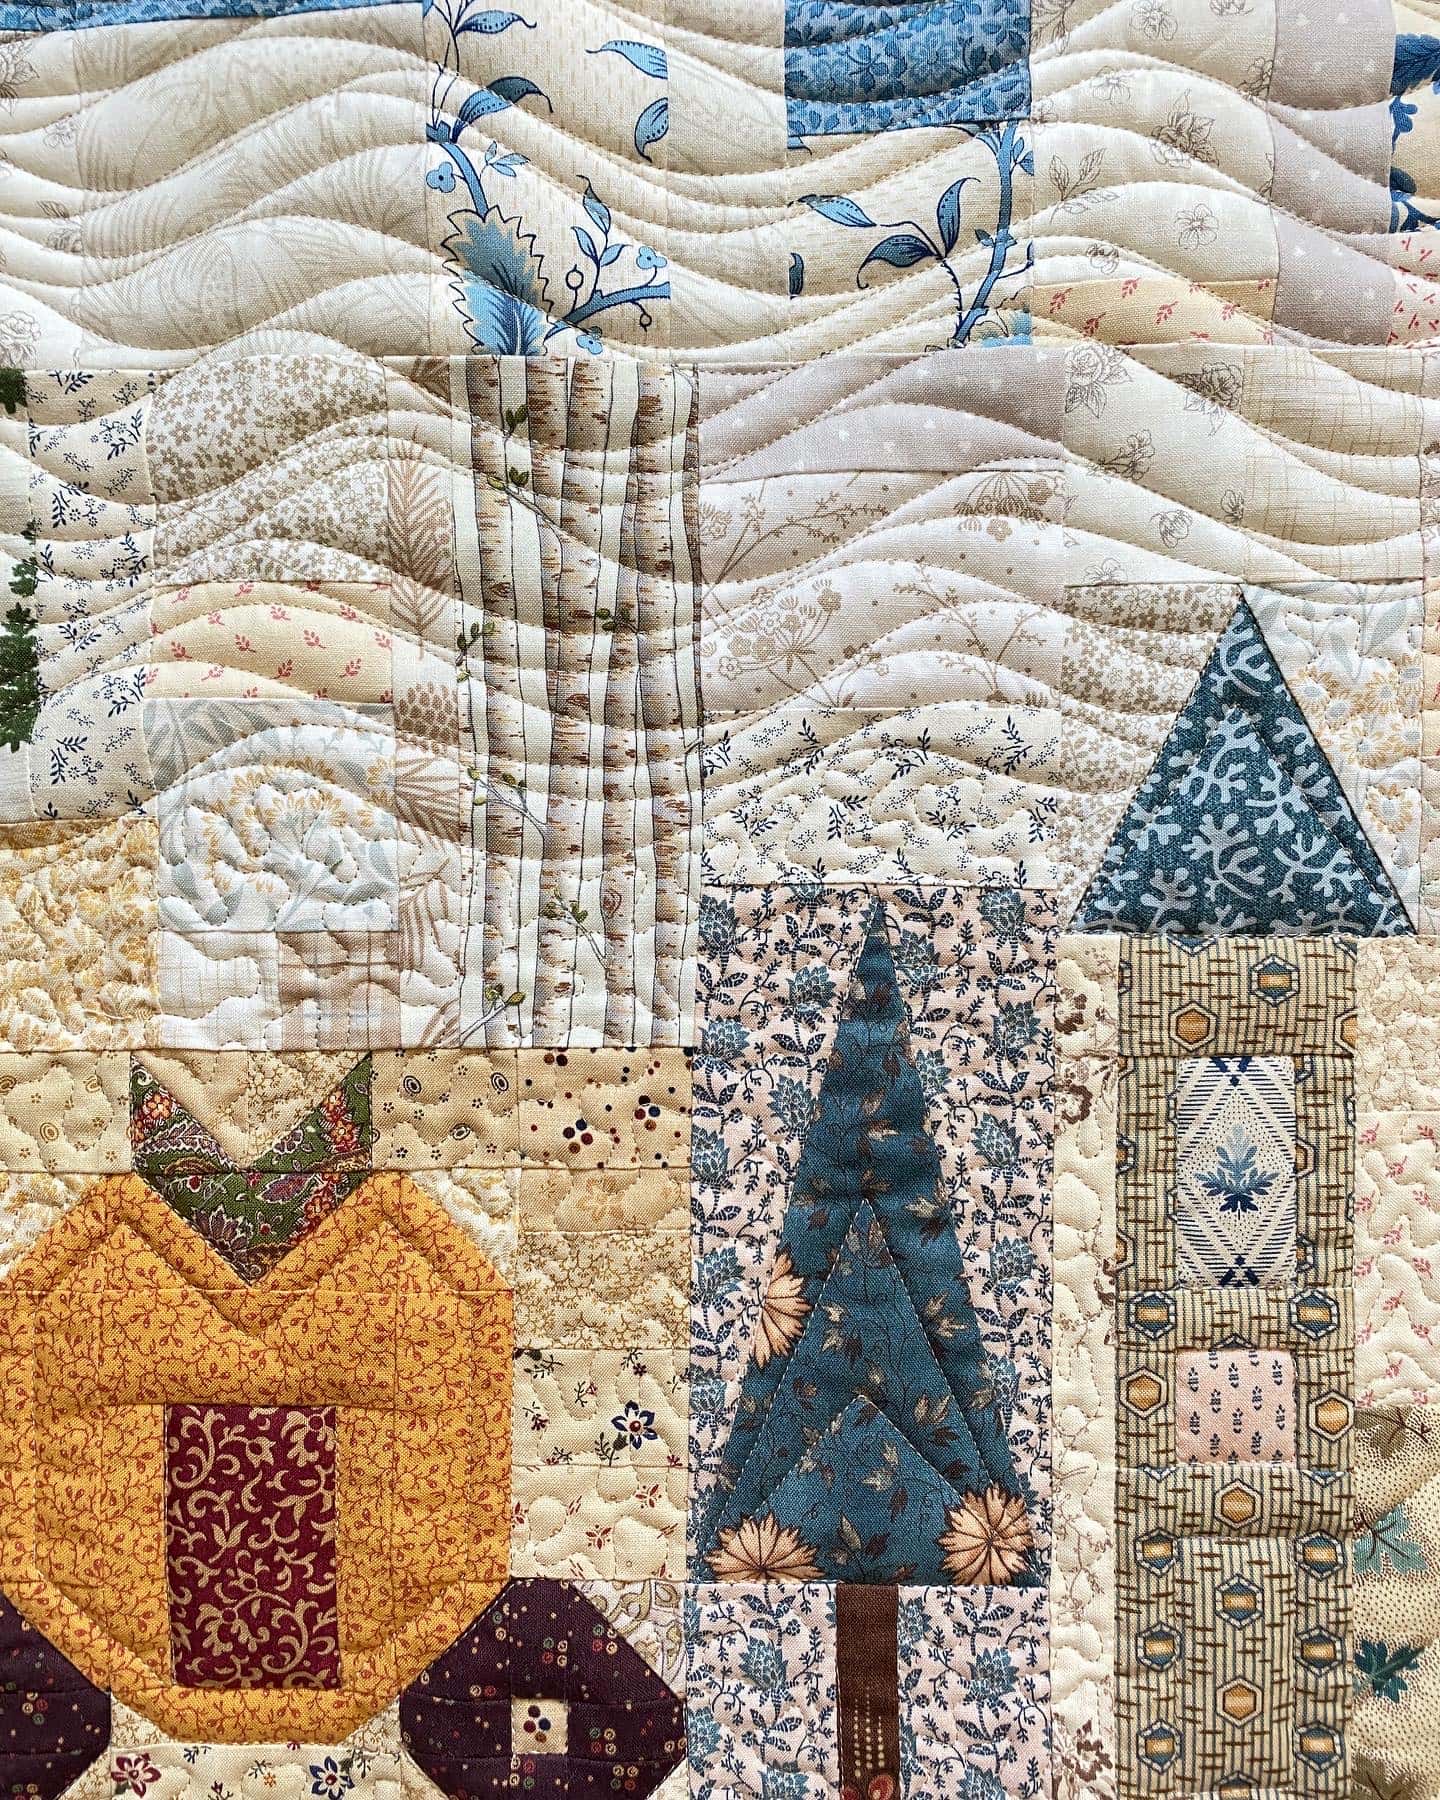 Decorative image showing a quilt.